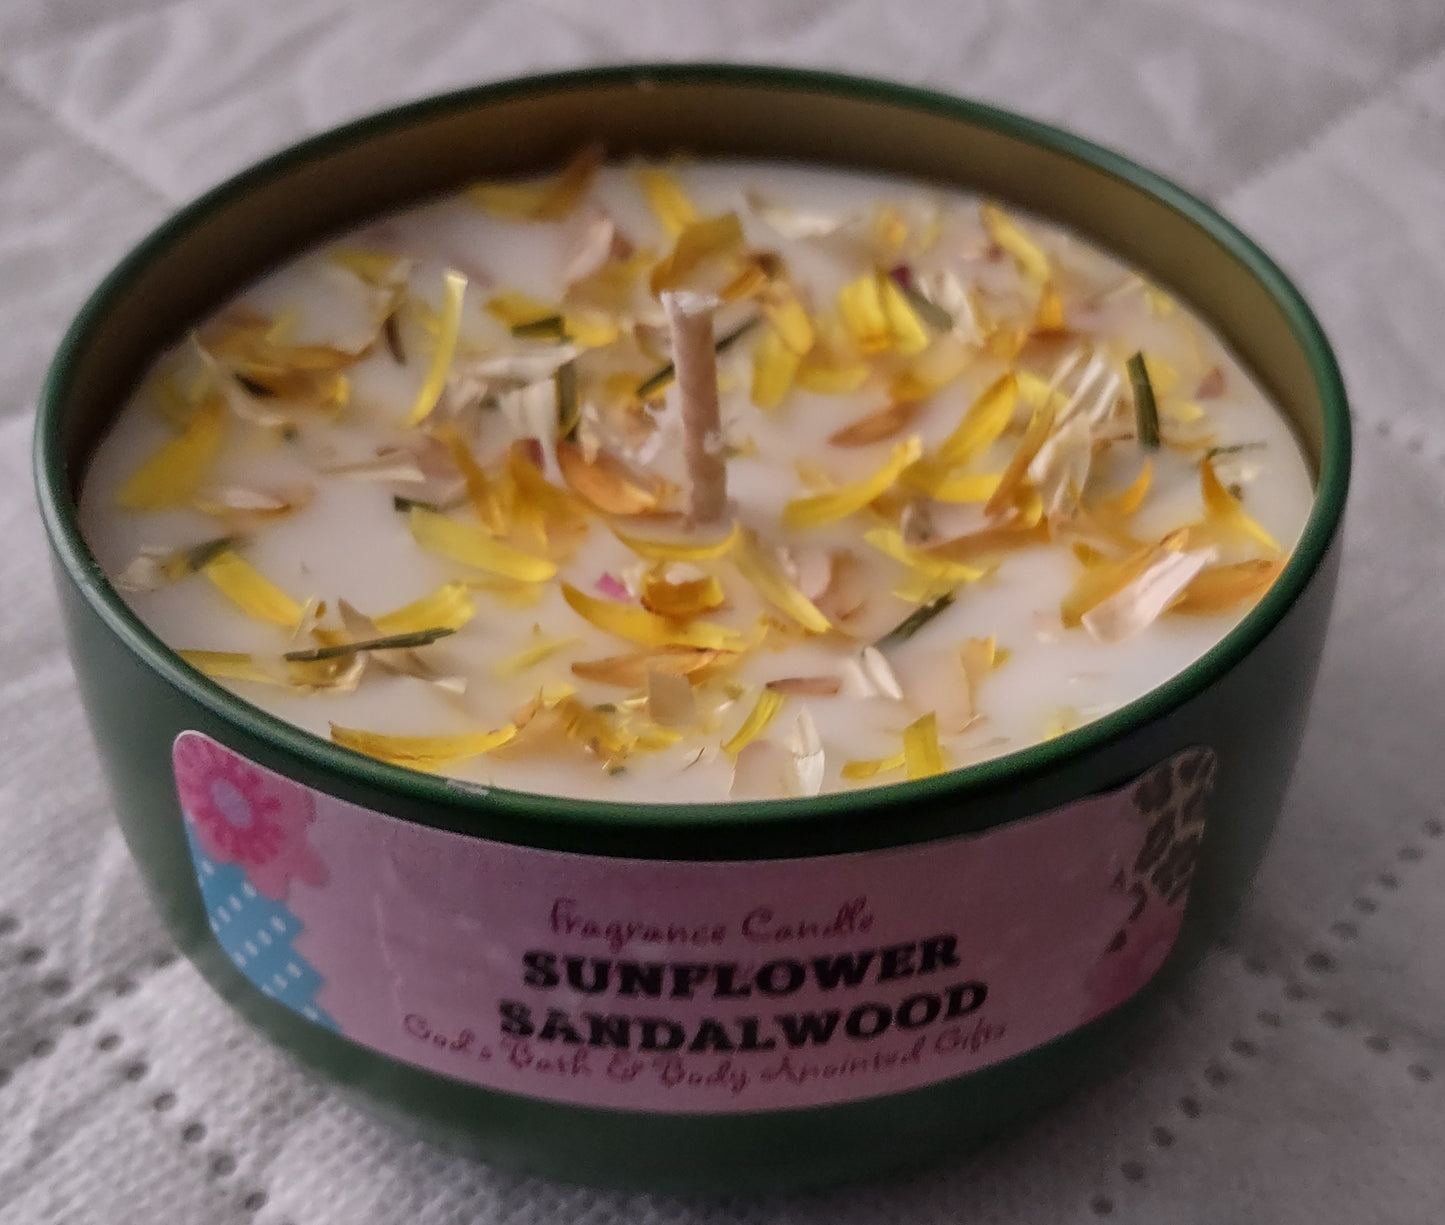 Sunflower Sandalwood - 8oz metallic tin can with lid